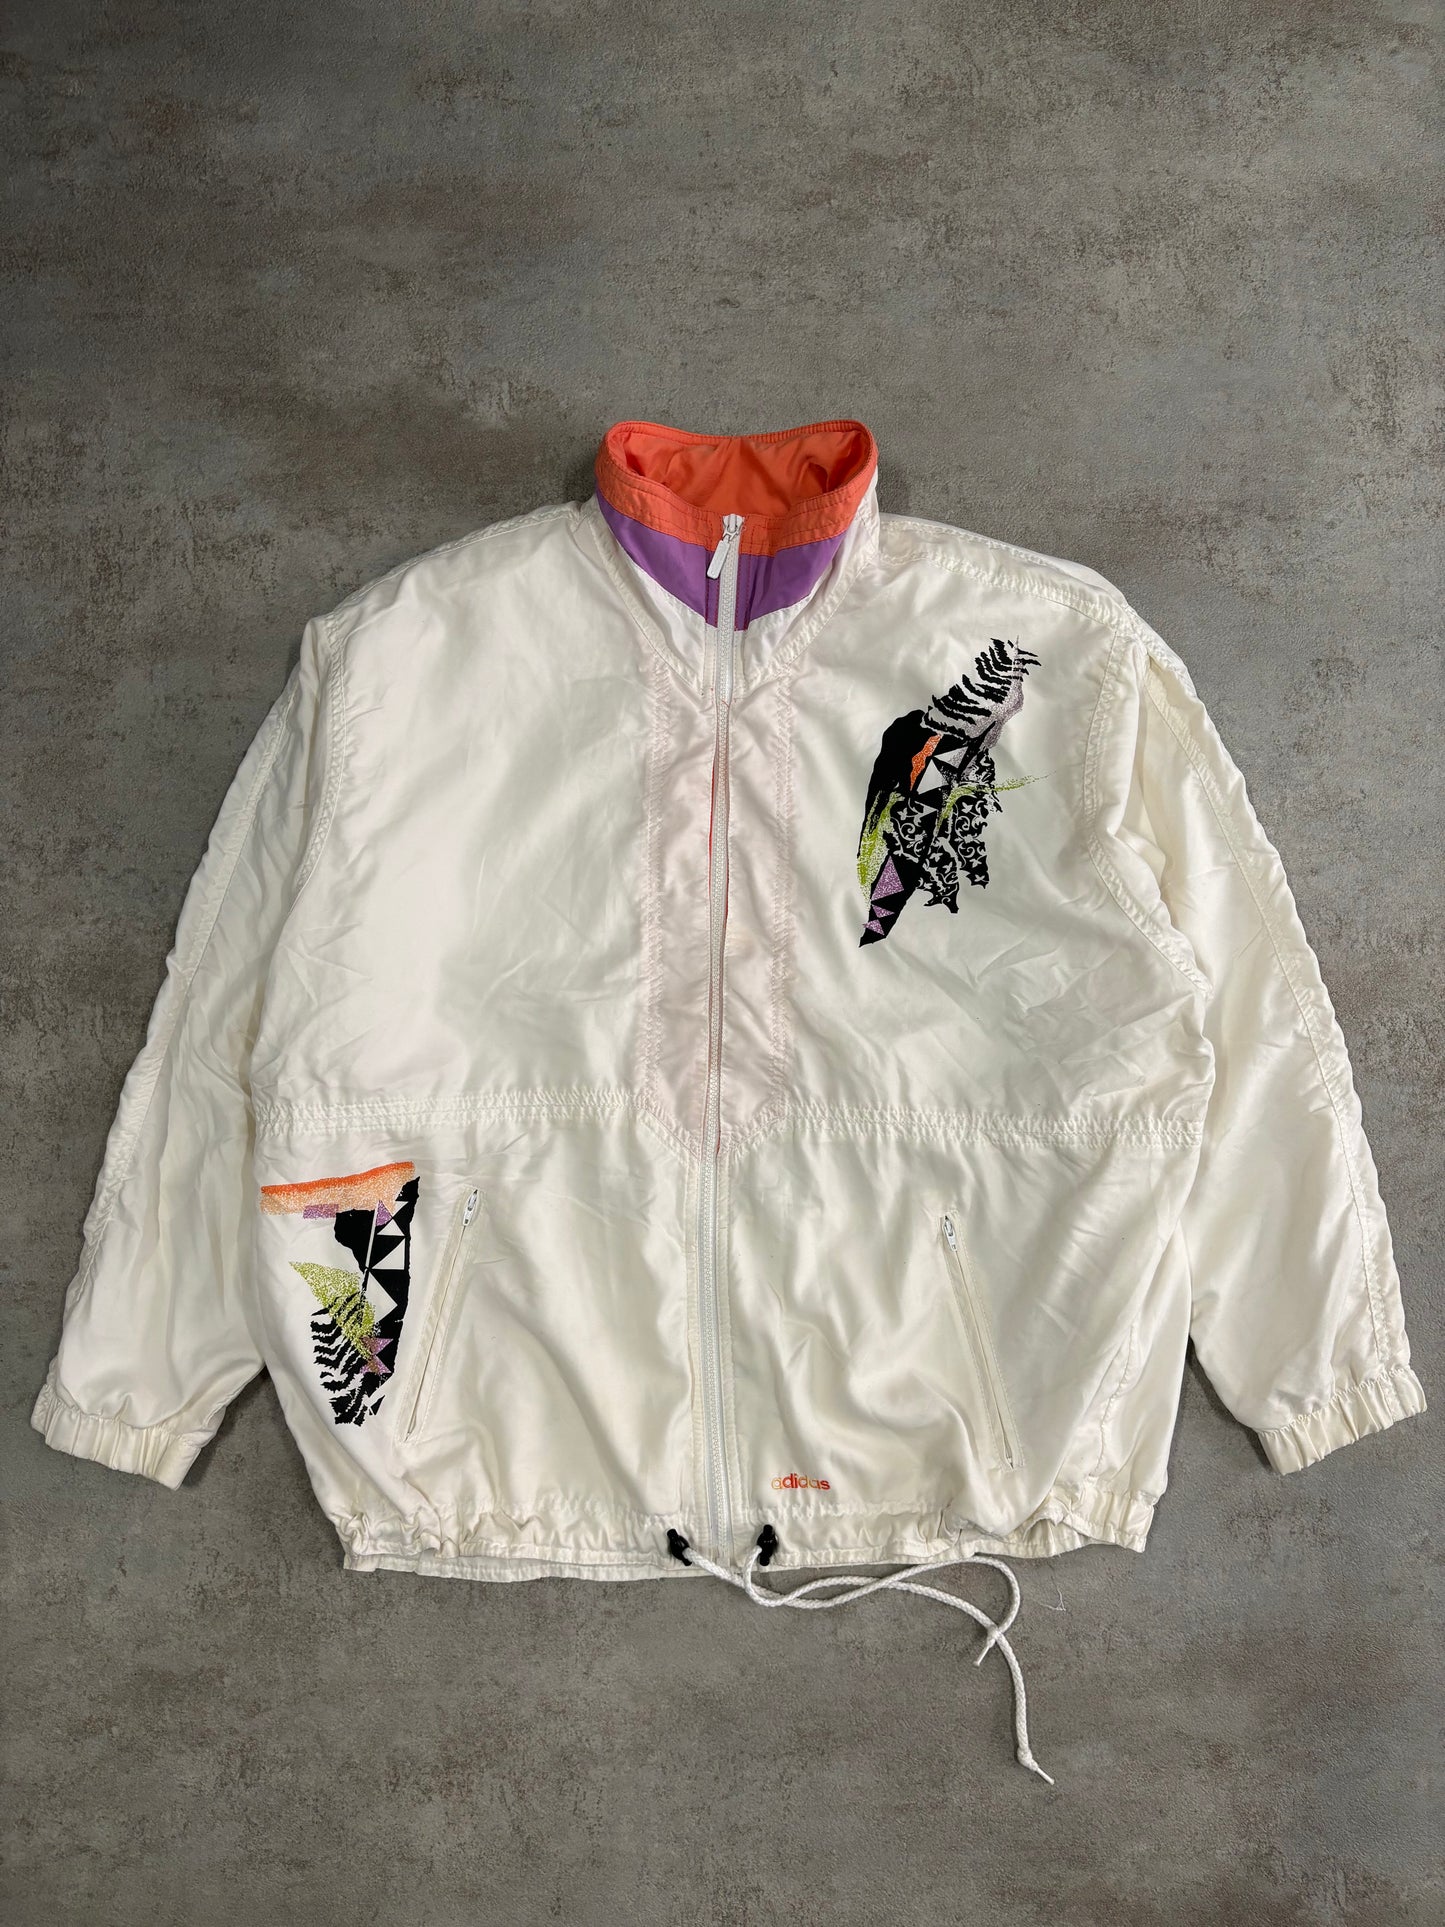 Adidas 80s Vintage 'Graffiti' Jacket - L